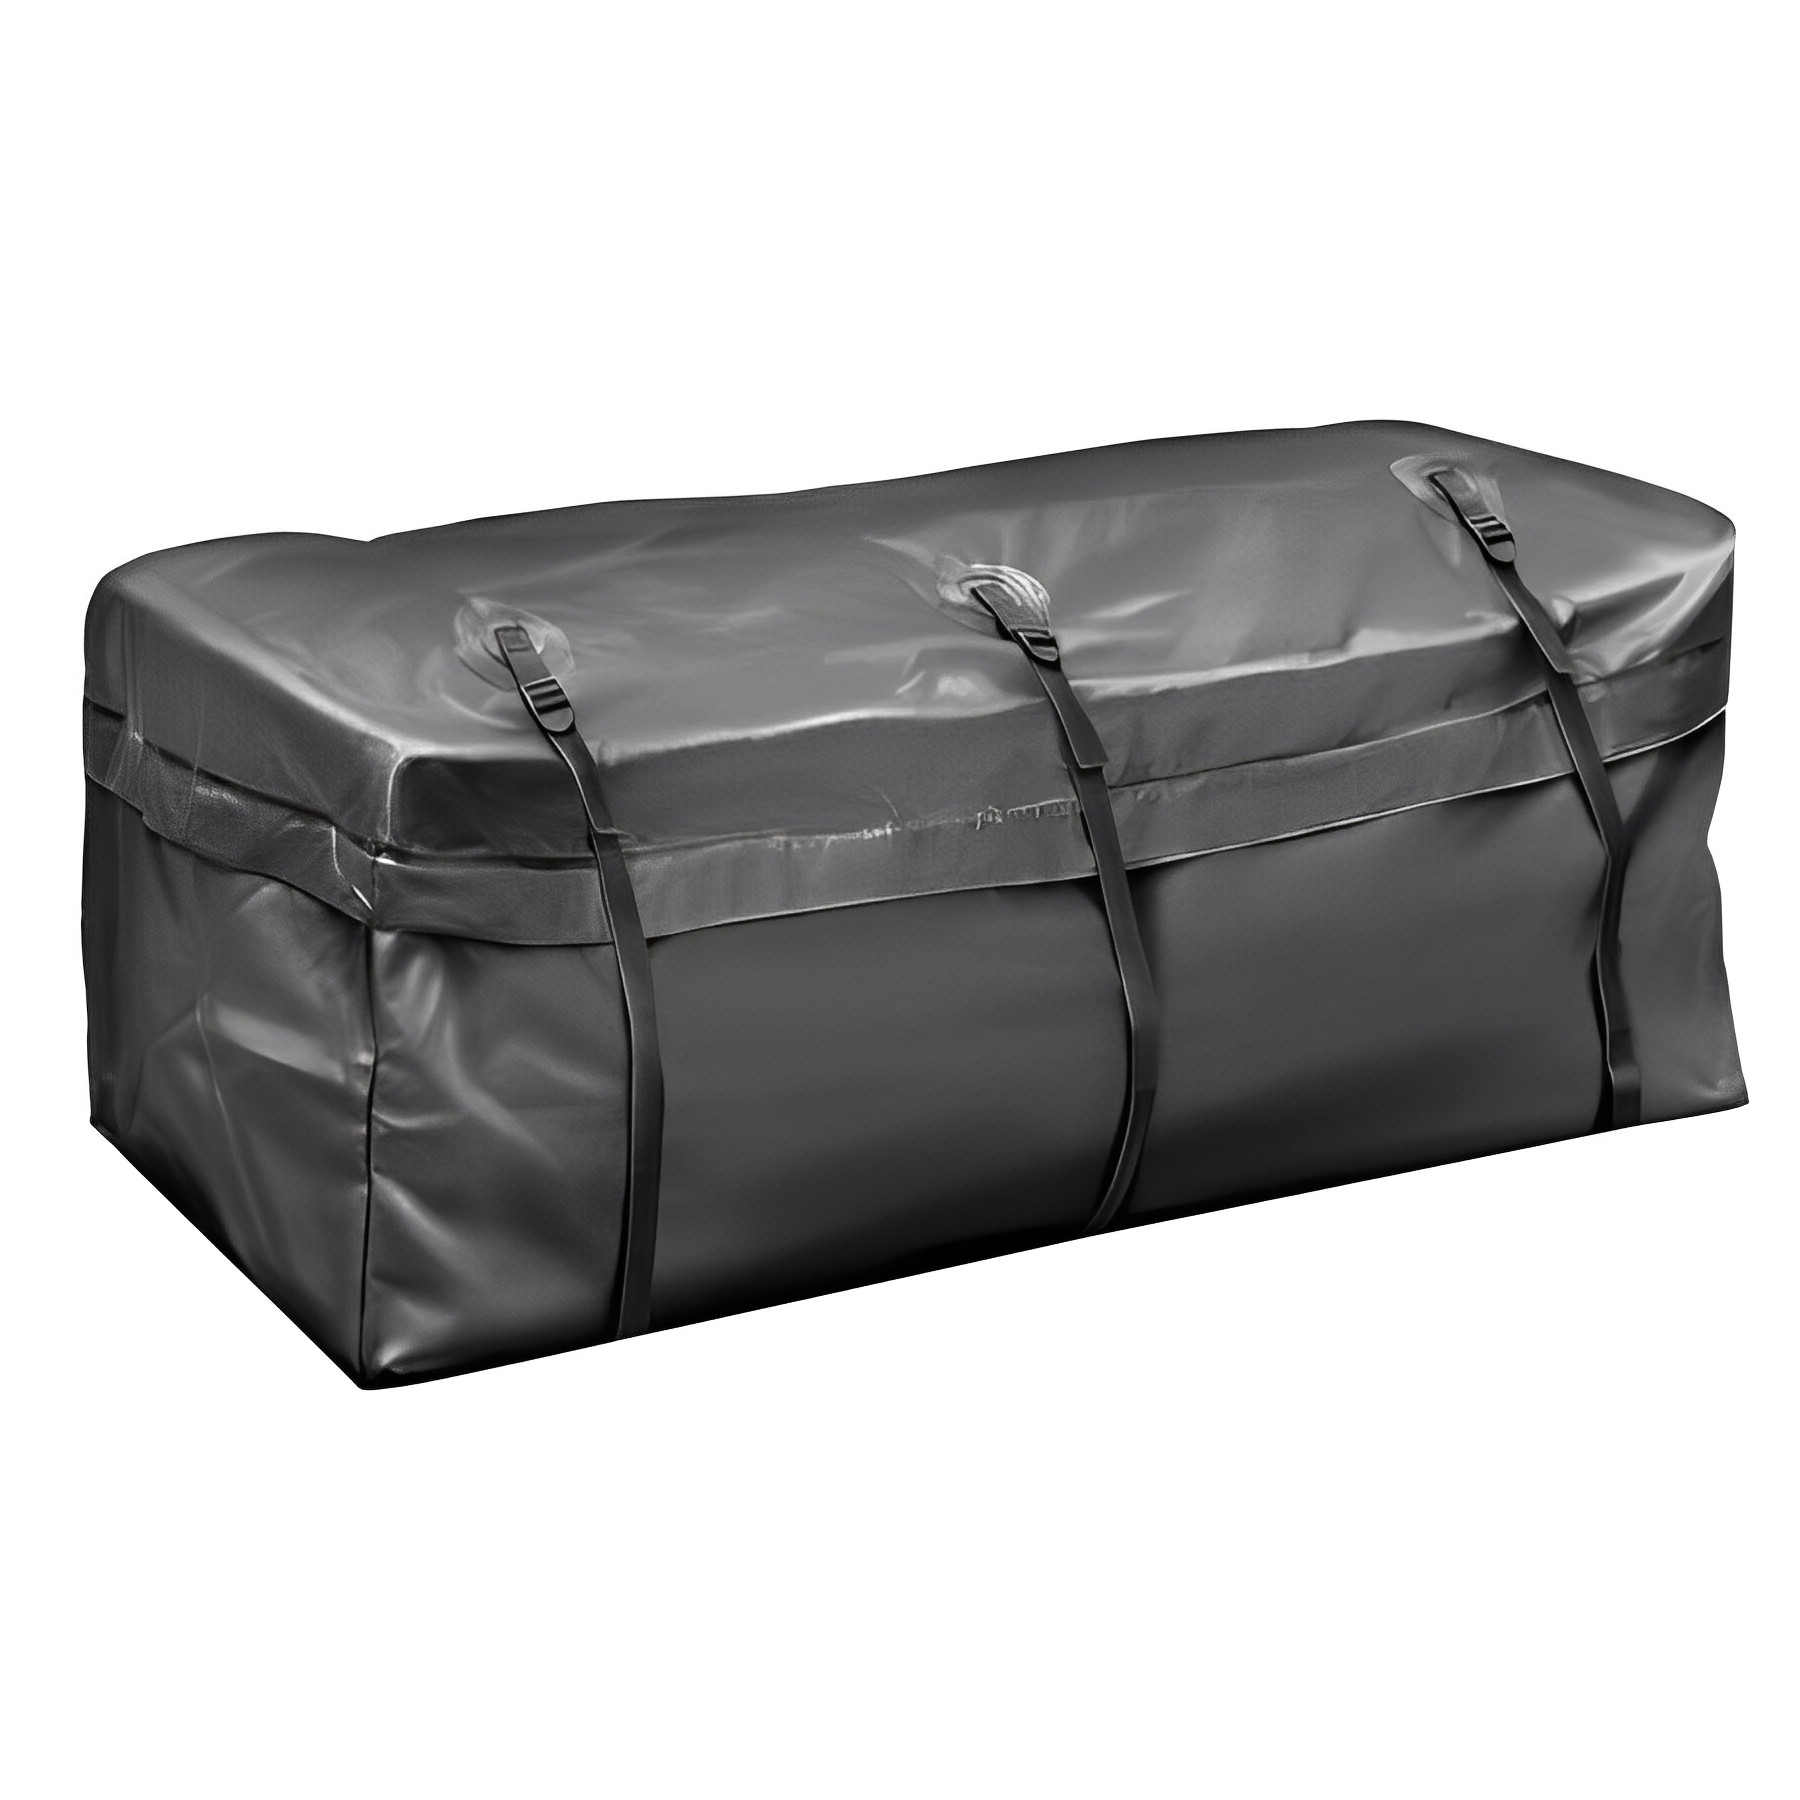 Hyper Tough Waterproof Cargo Tray Bag, Black - image 1 of 2